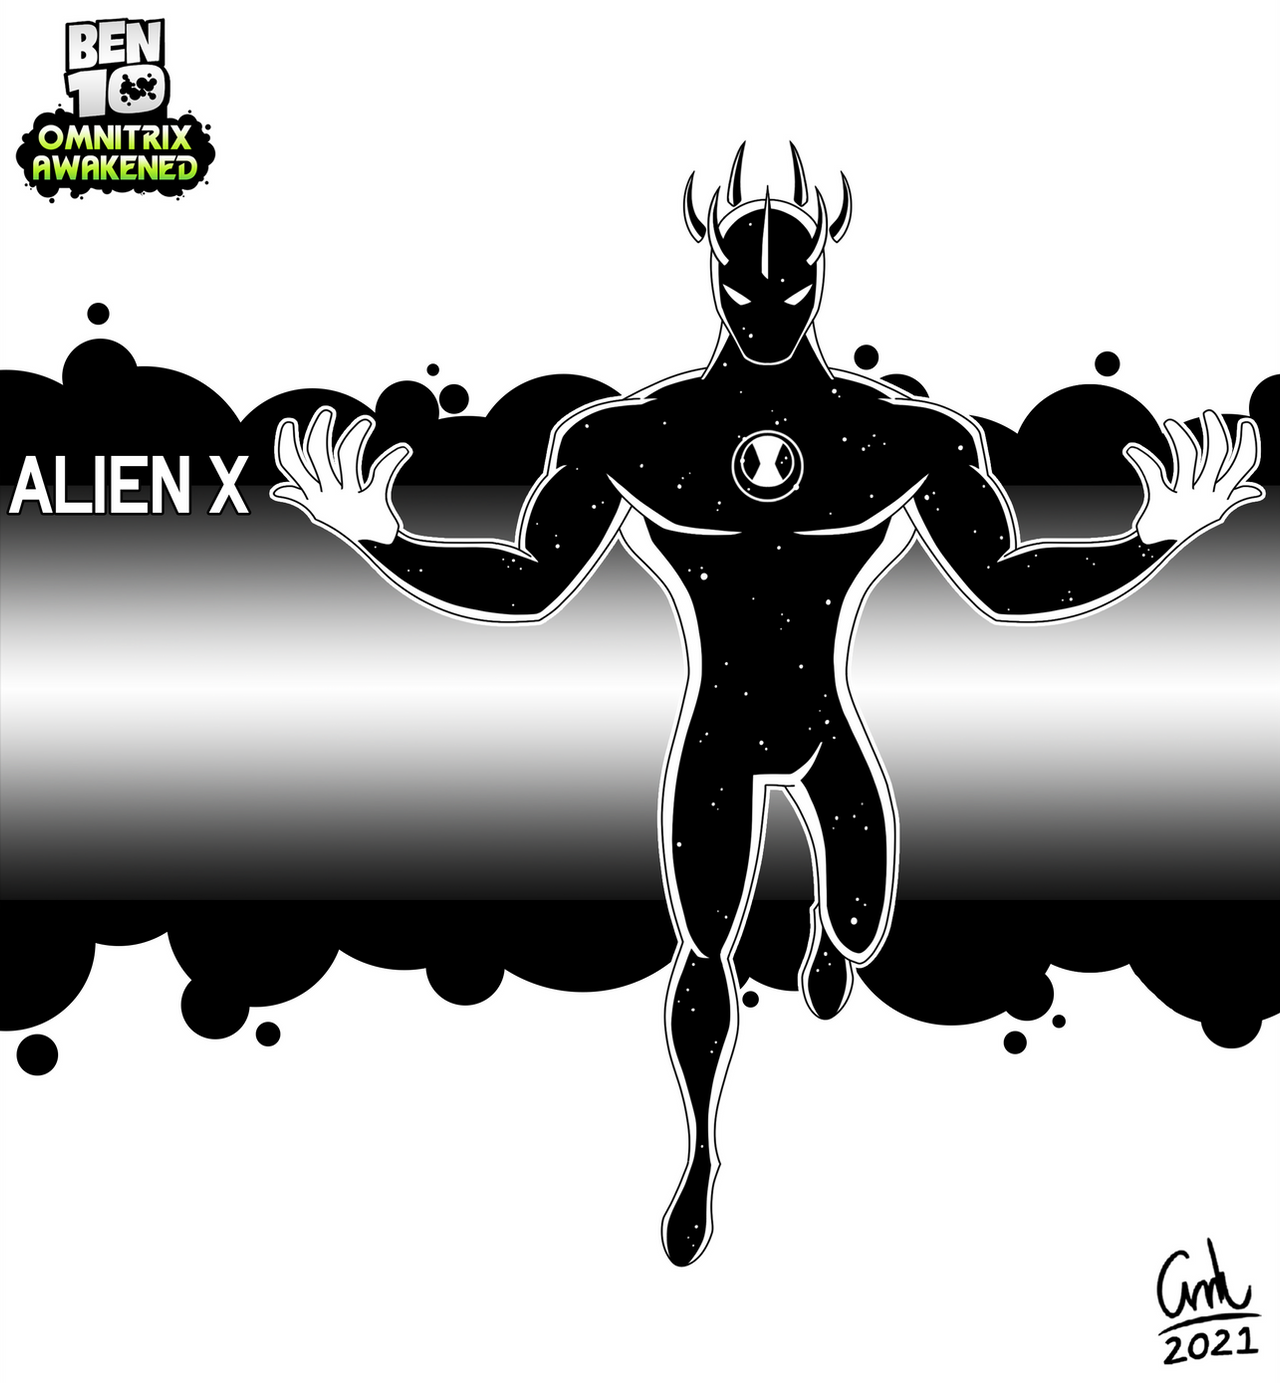 Ben's Aliens, Omnitrix Awakened Wiki